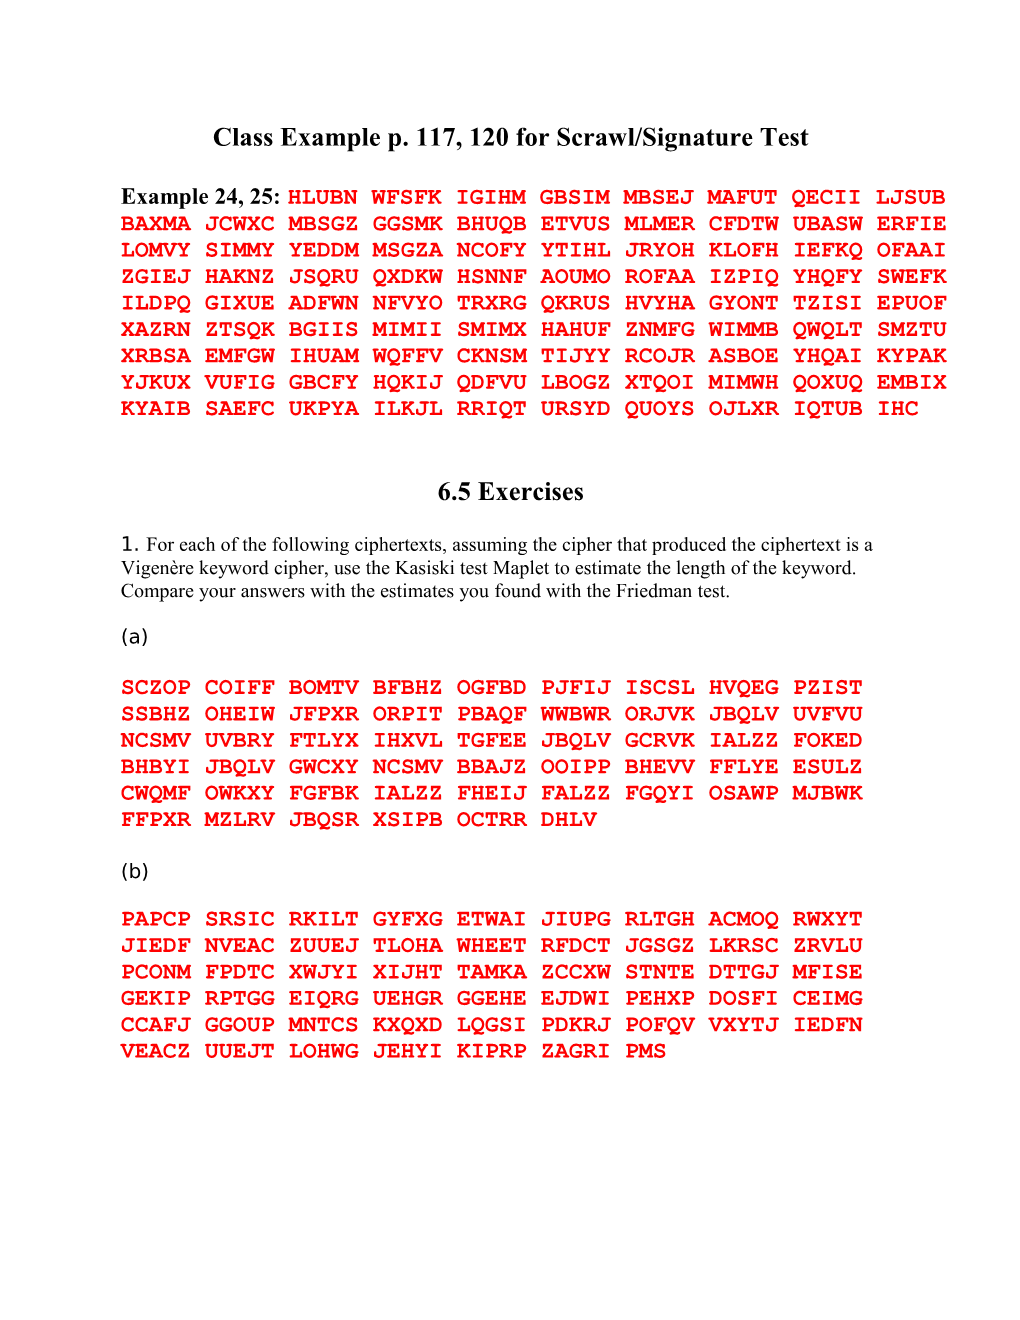 Class Example P. 117, 120 for Scrawl/Signature Test